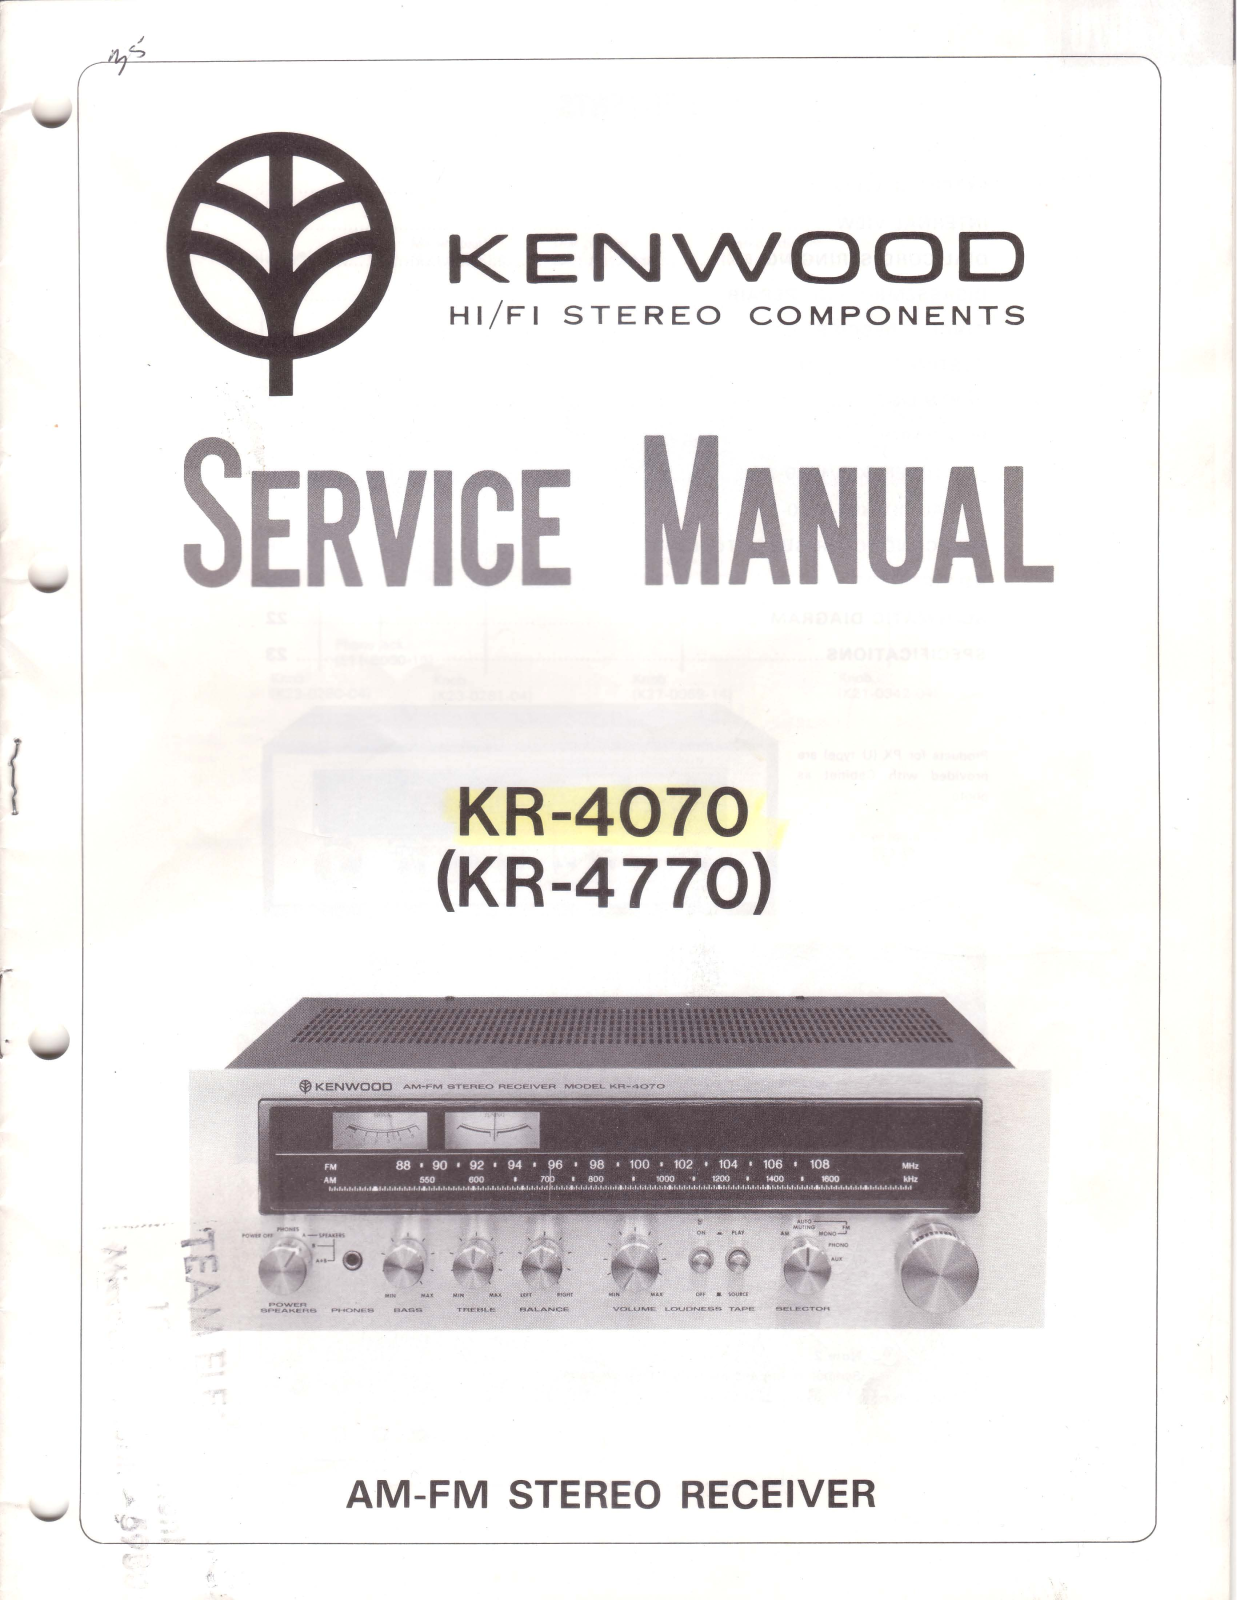 Kenwood KR-4070, KR-4770 Service manual